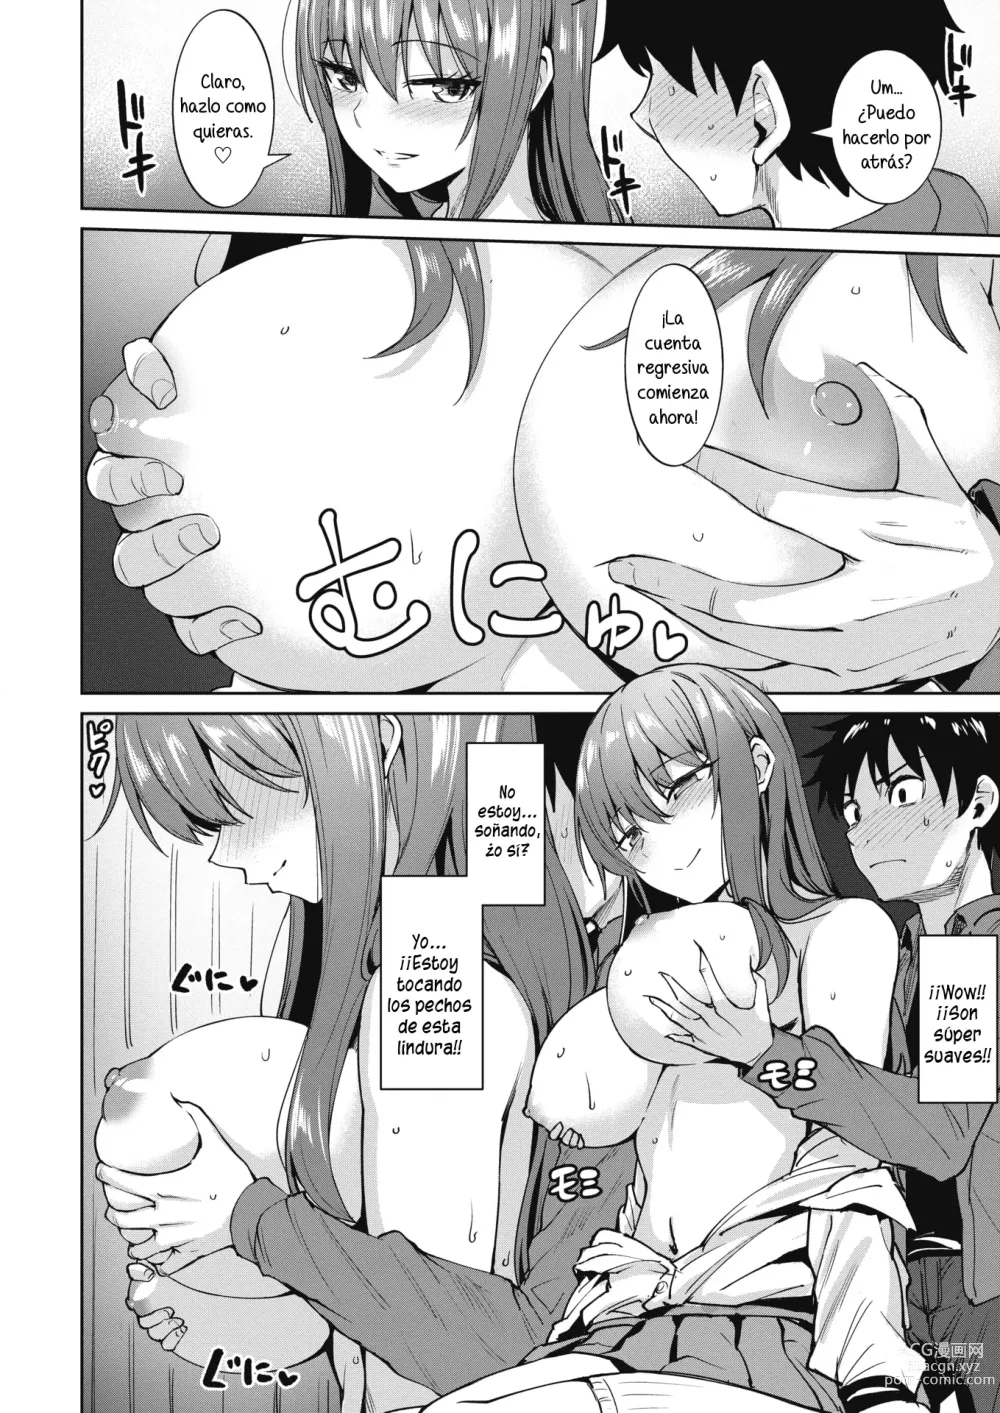 Page 8 of manga Dore ni Suru? - Which ecstasy do you want?